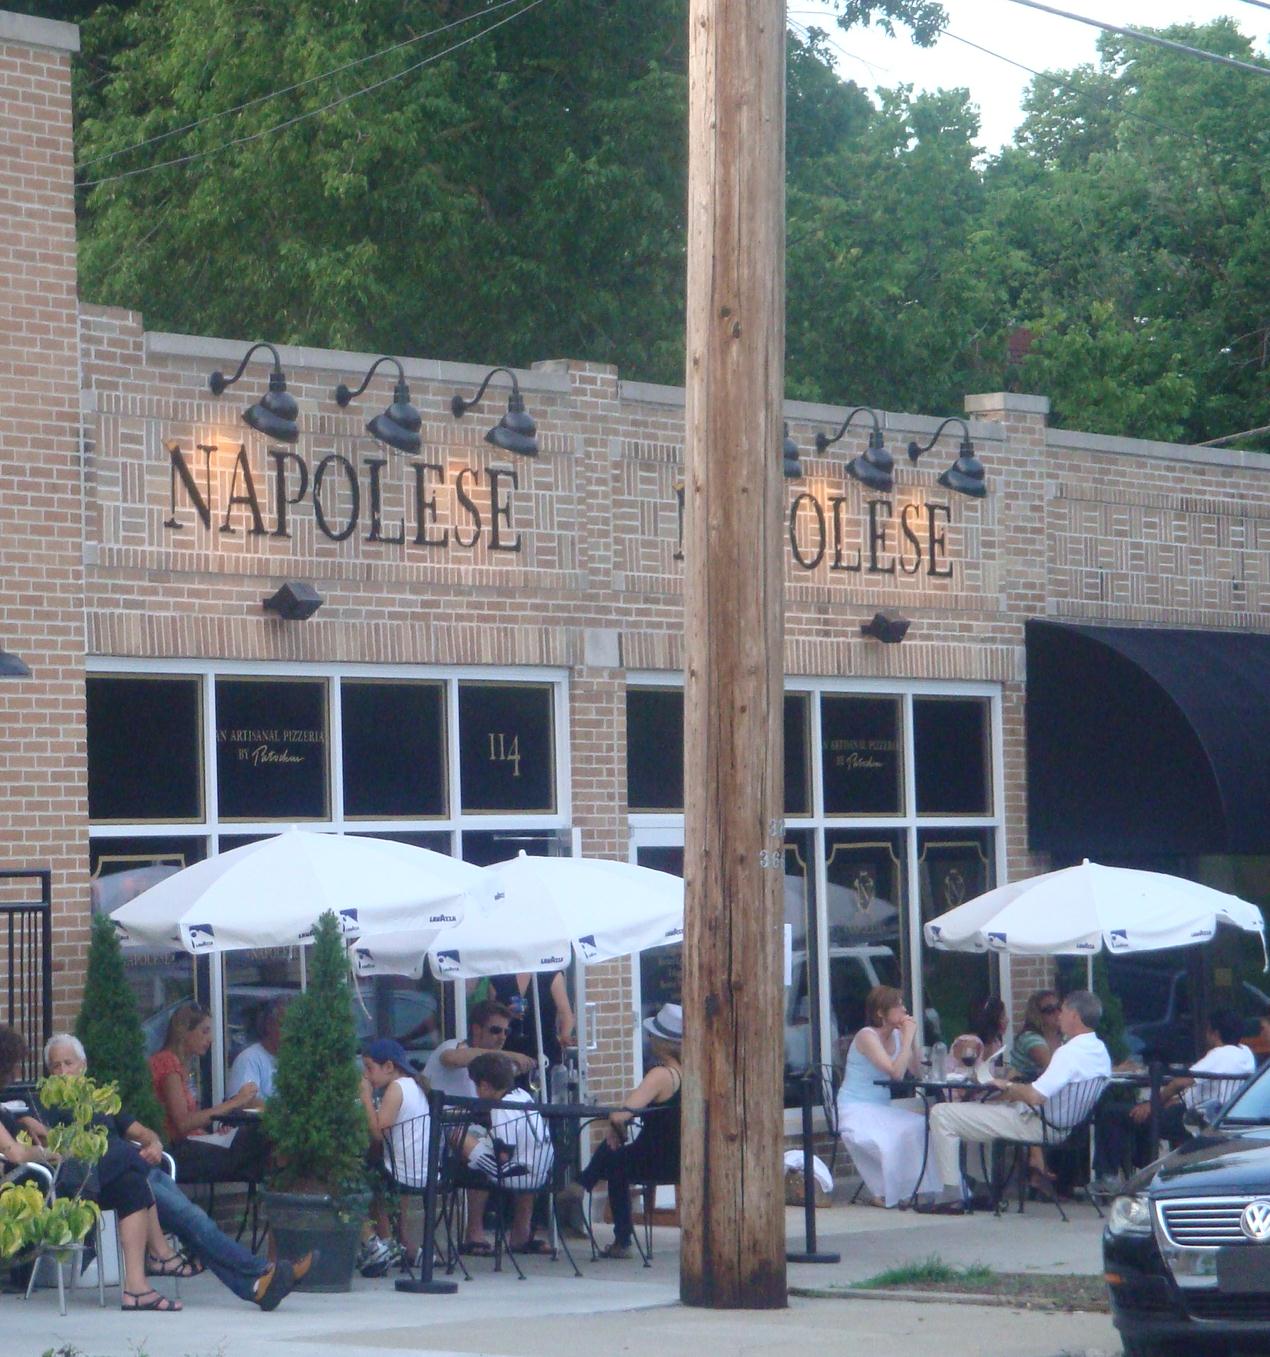 Indianapolis Restaurant Scene: Napolese